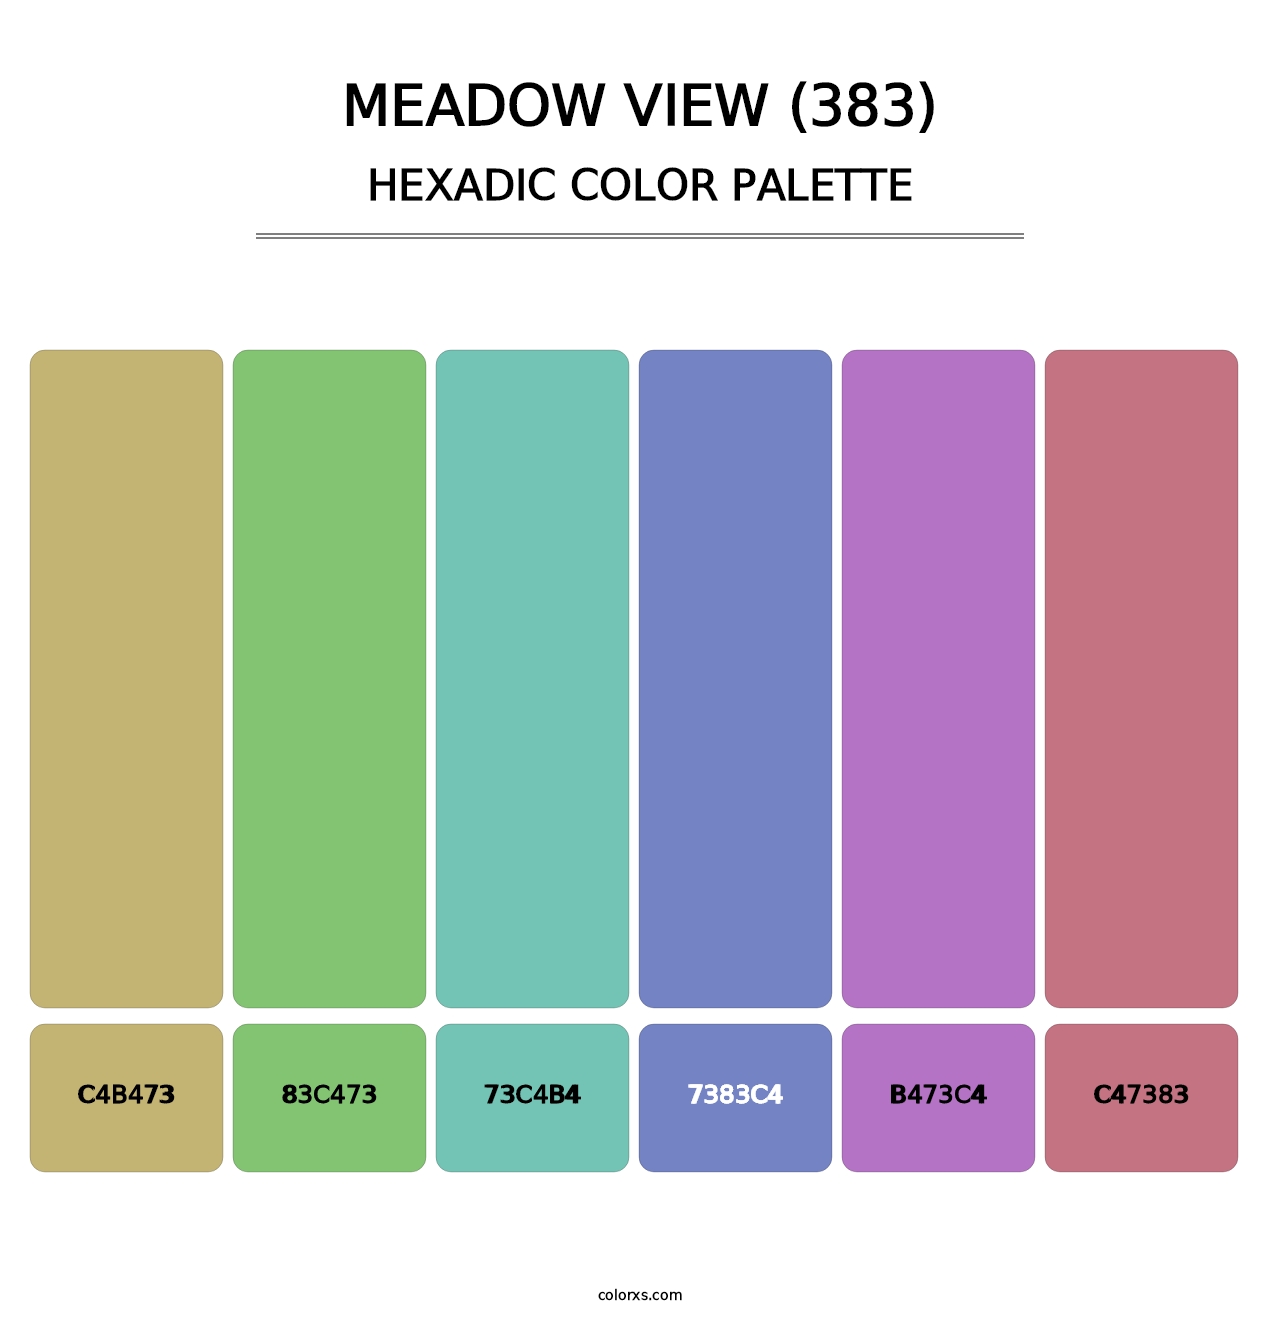 Meadow View (383) - Hexadic Color Palette